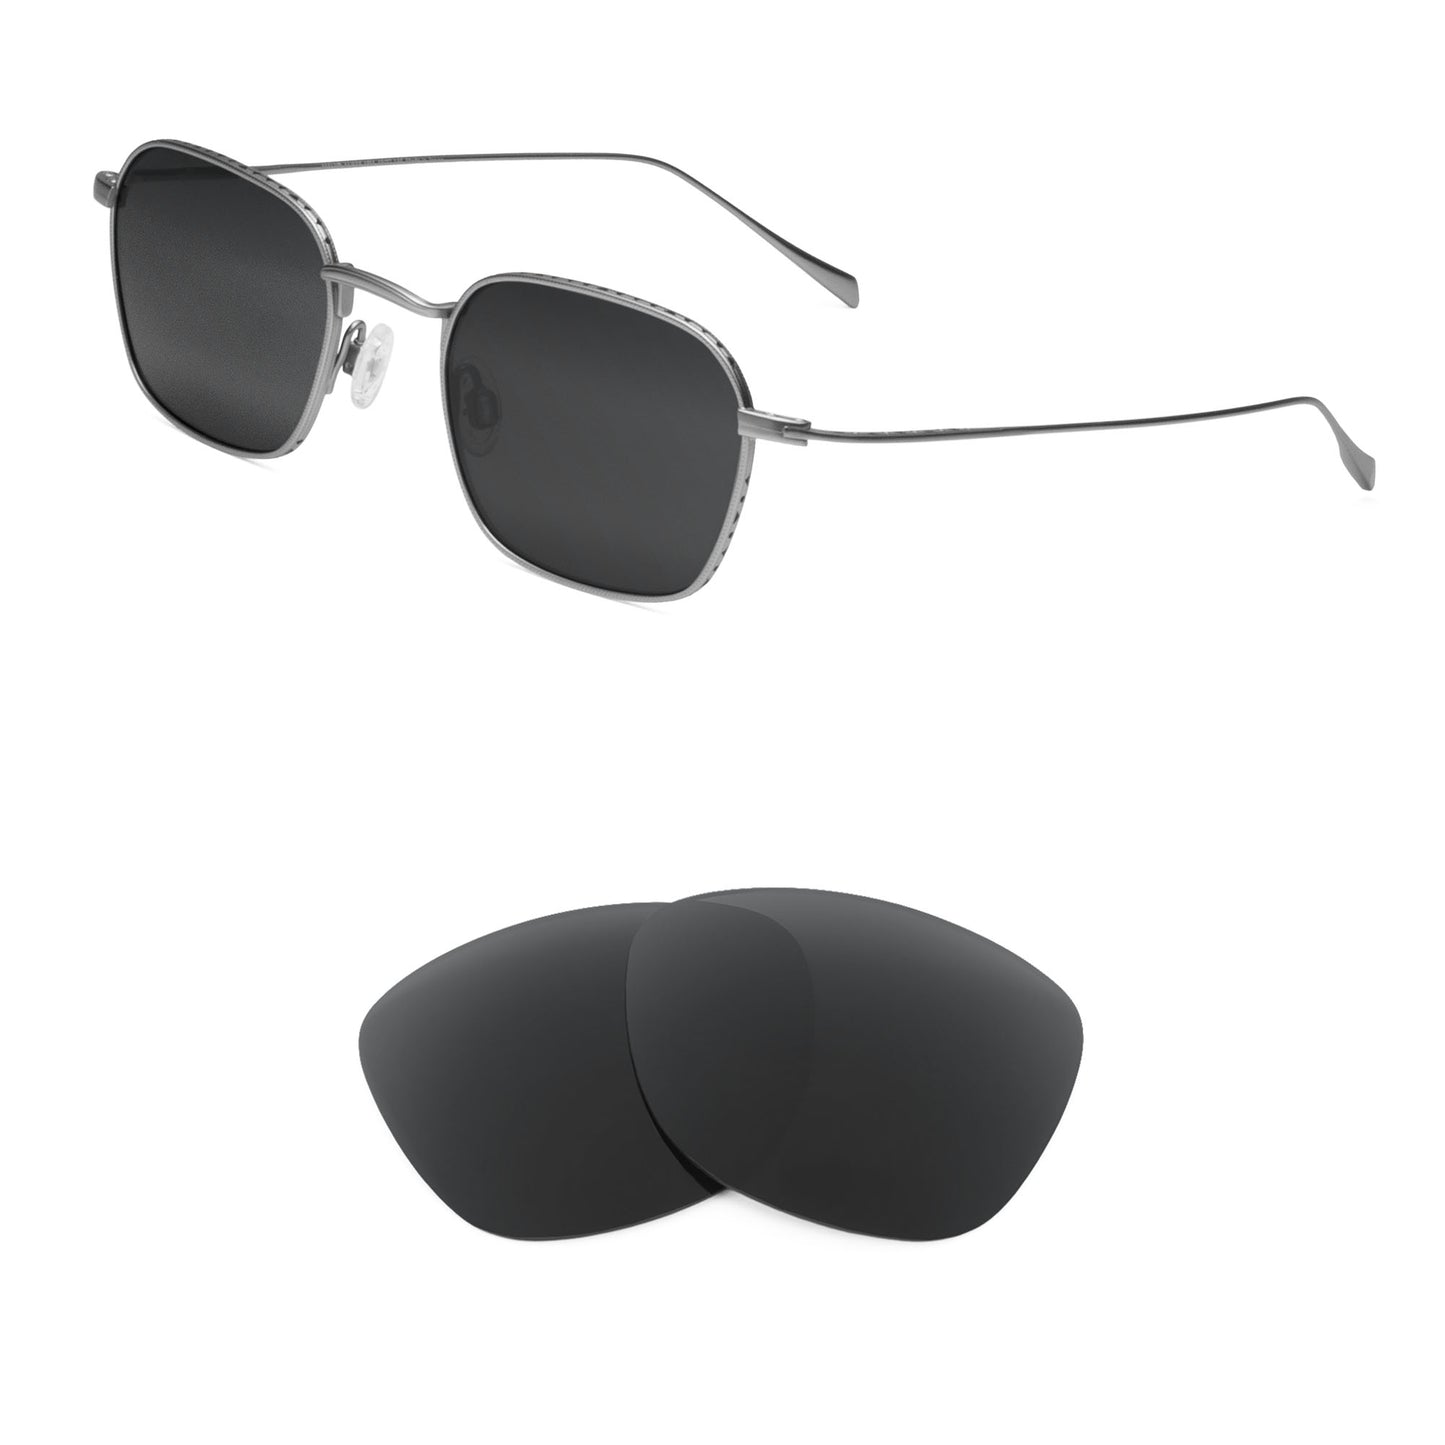 Maui Jim Puka MJ556 sunglasses with replacement lenses